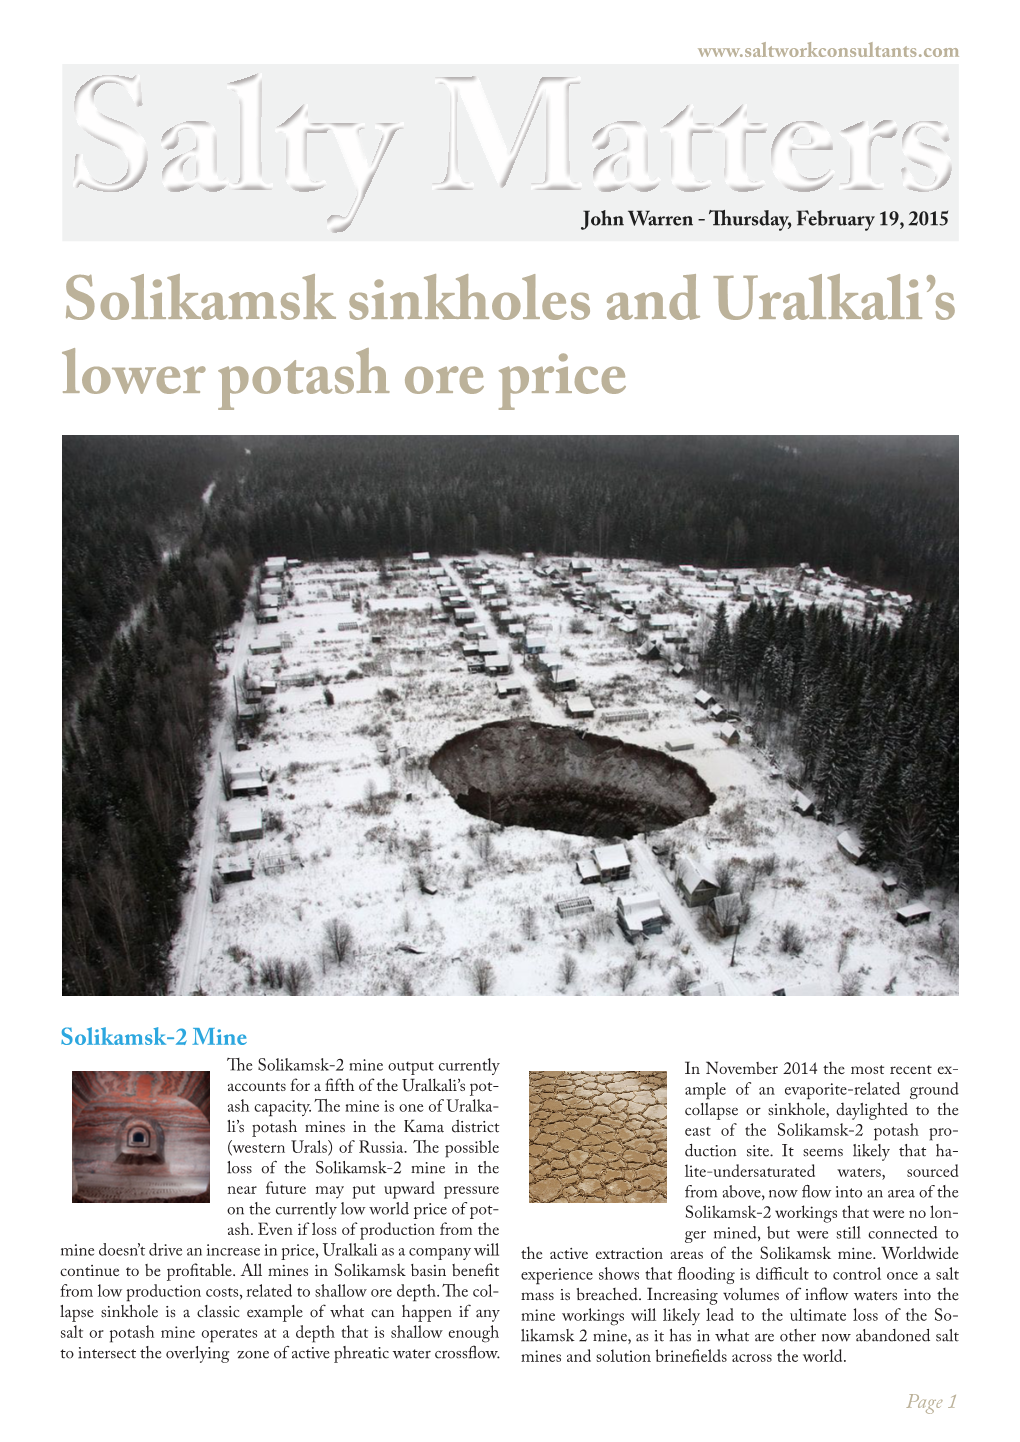 Solikamsk Sinkholes and Uralkali's Lower Potash Ore Price